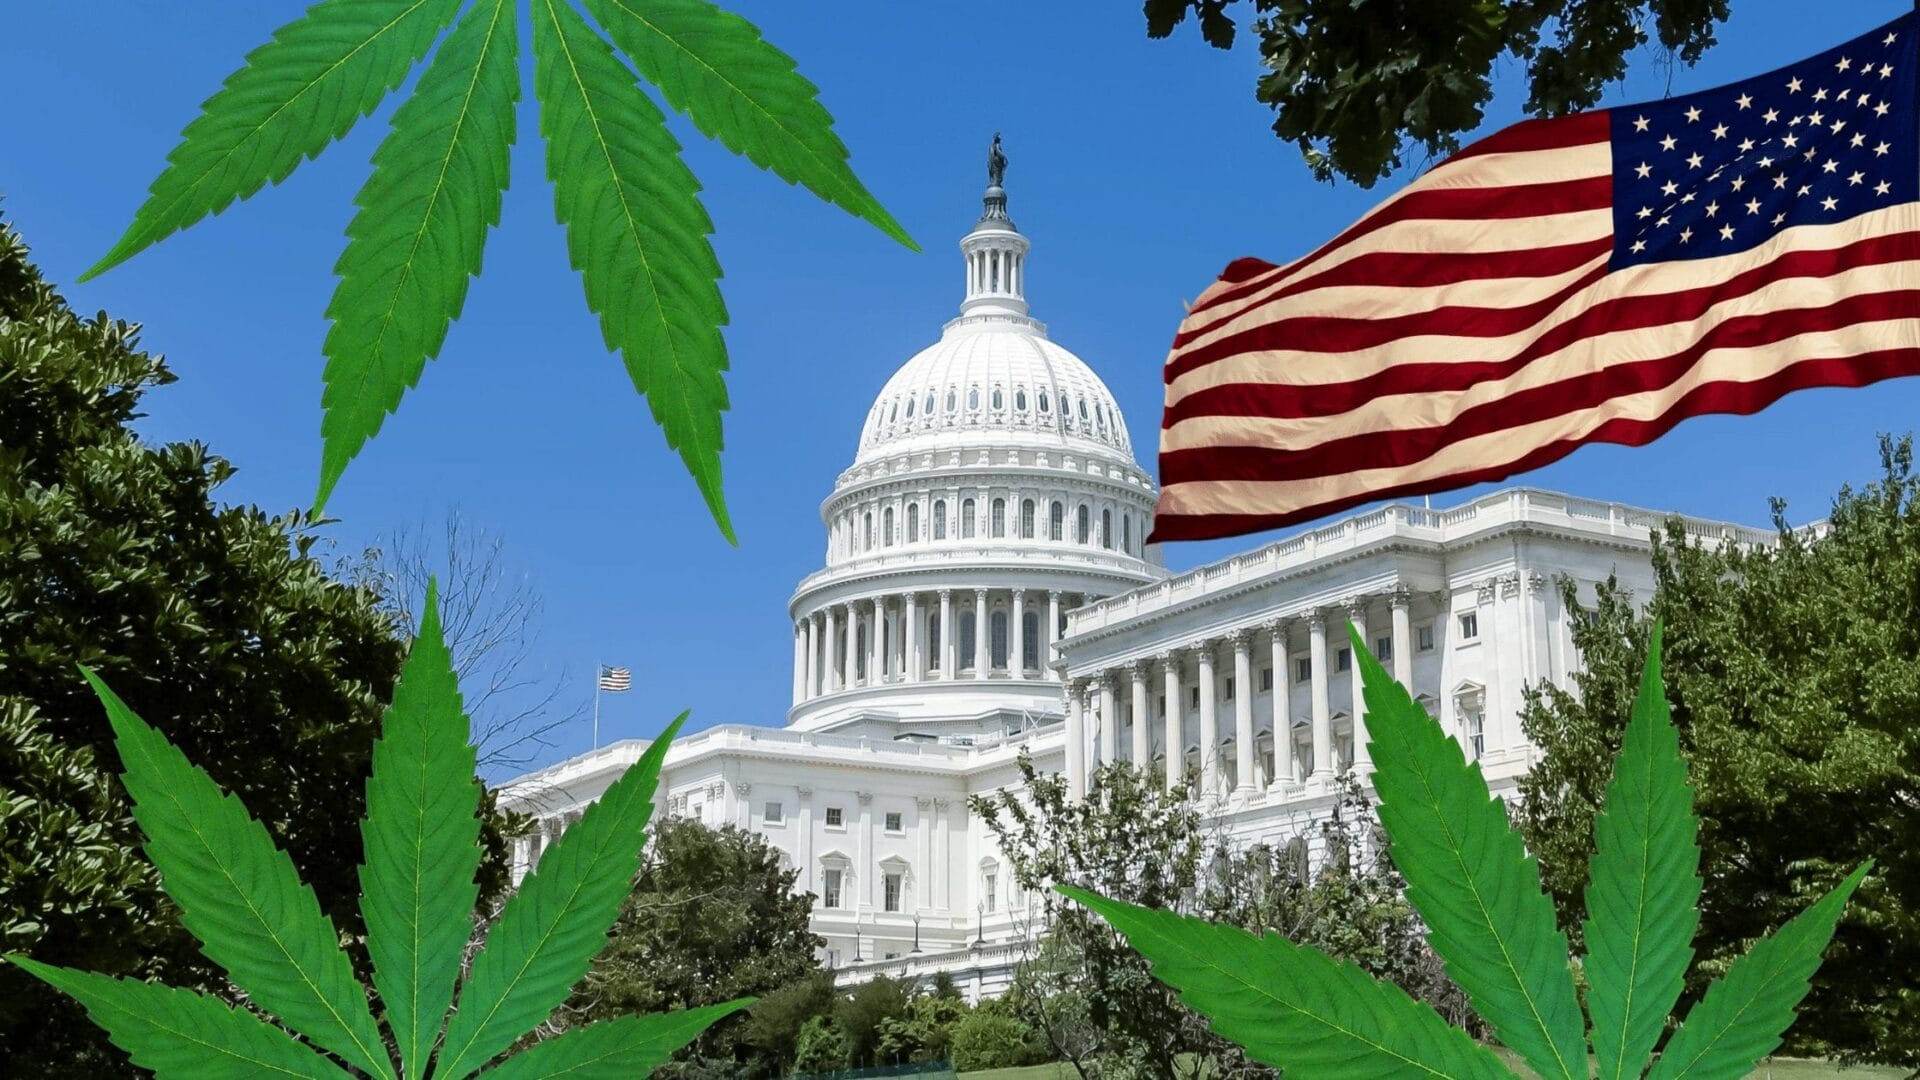 House To Vote On Historic Marijuana Legalization Bill Next Month